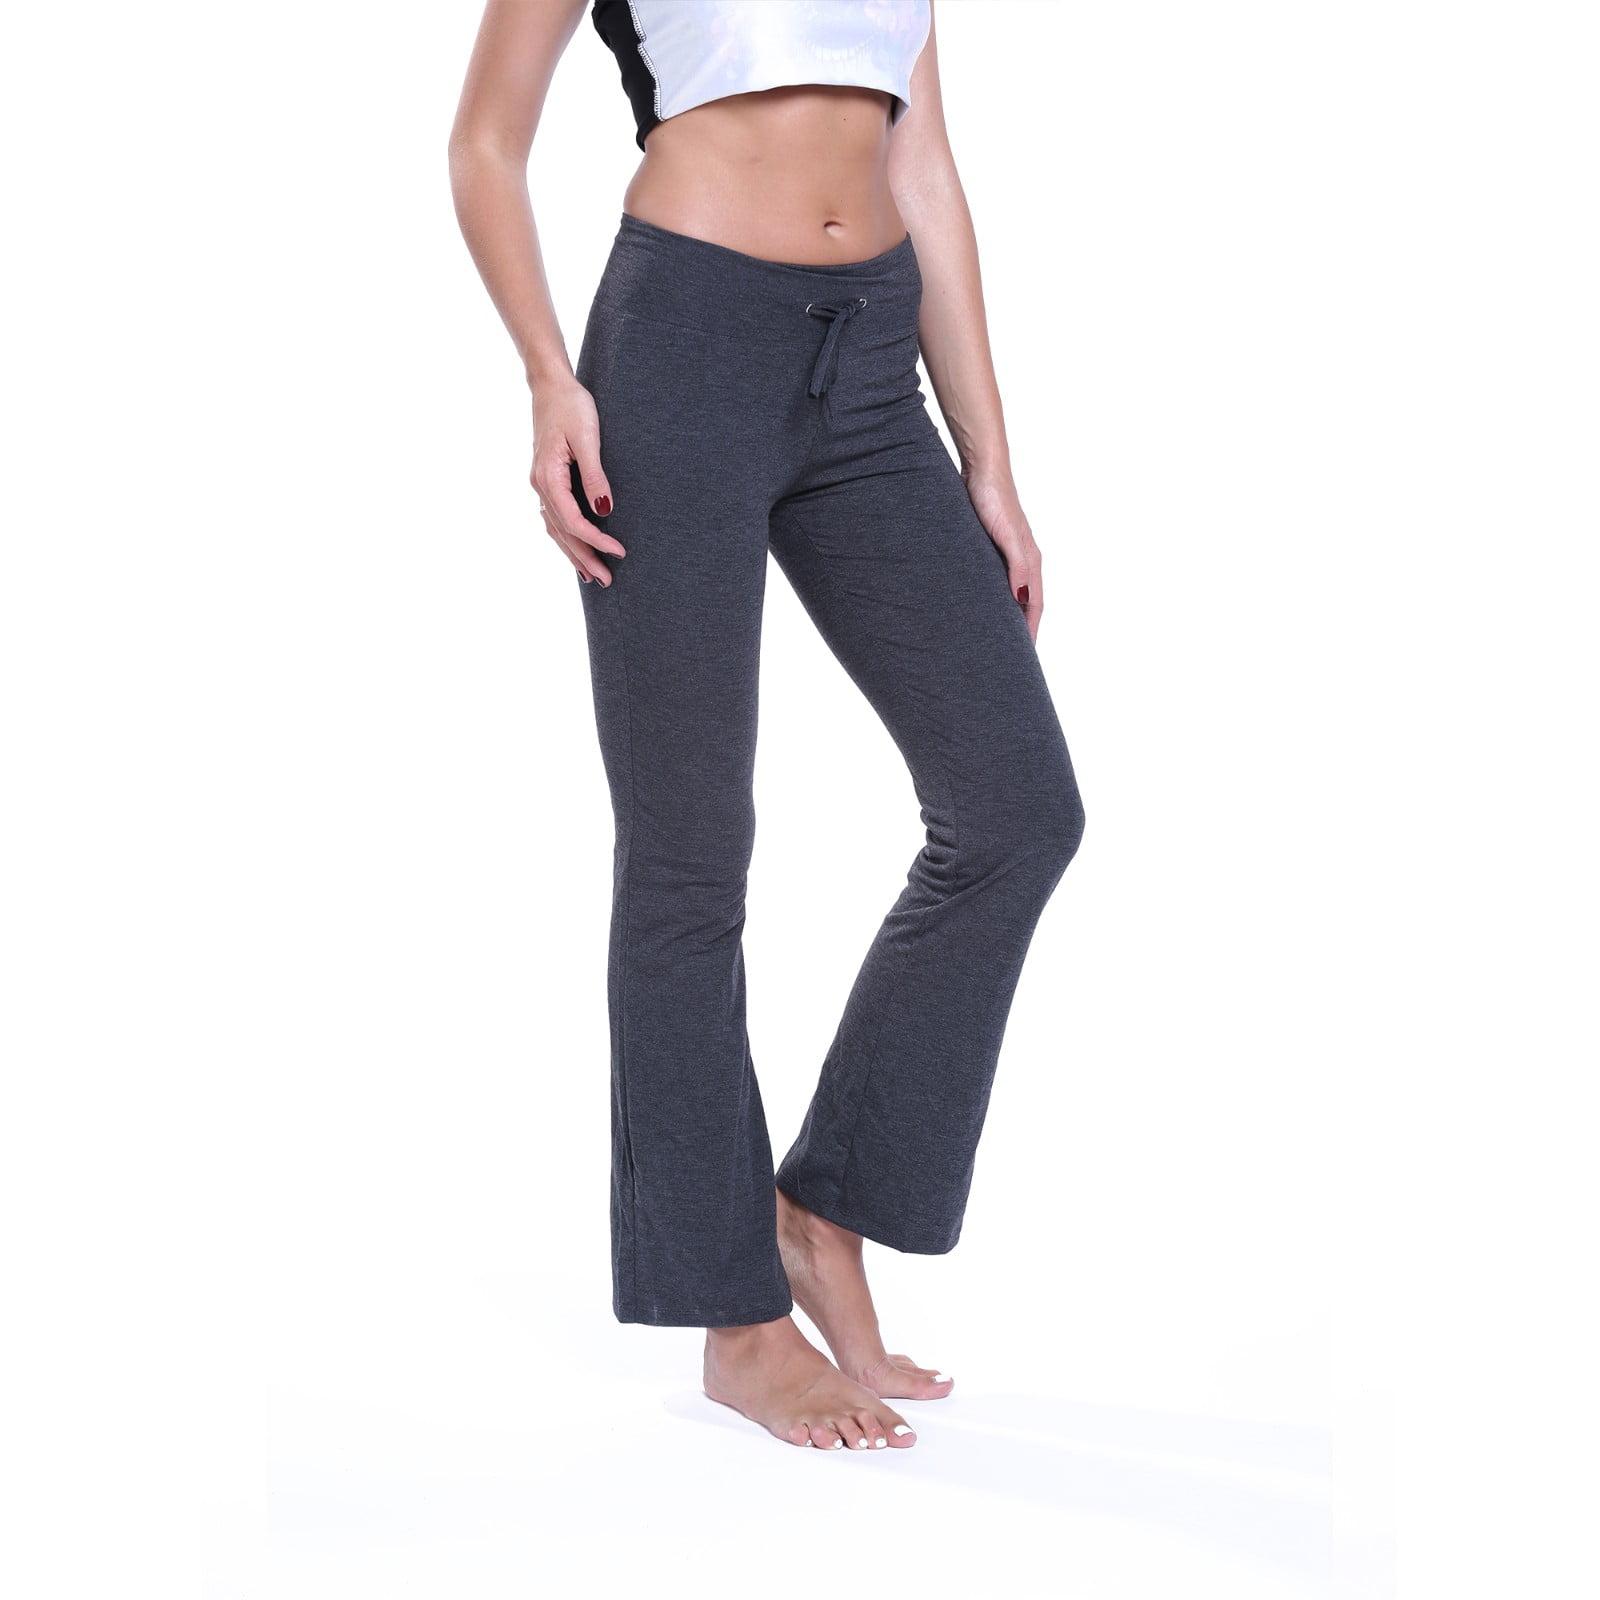 HISKYWIN Yoga Pants 4 Pocket, Tummy Control, Stretch Gray Women's